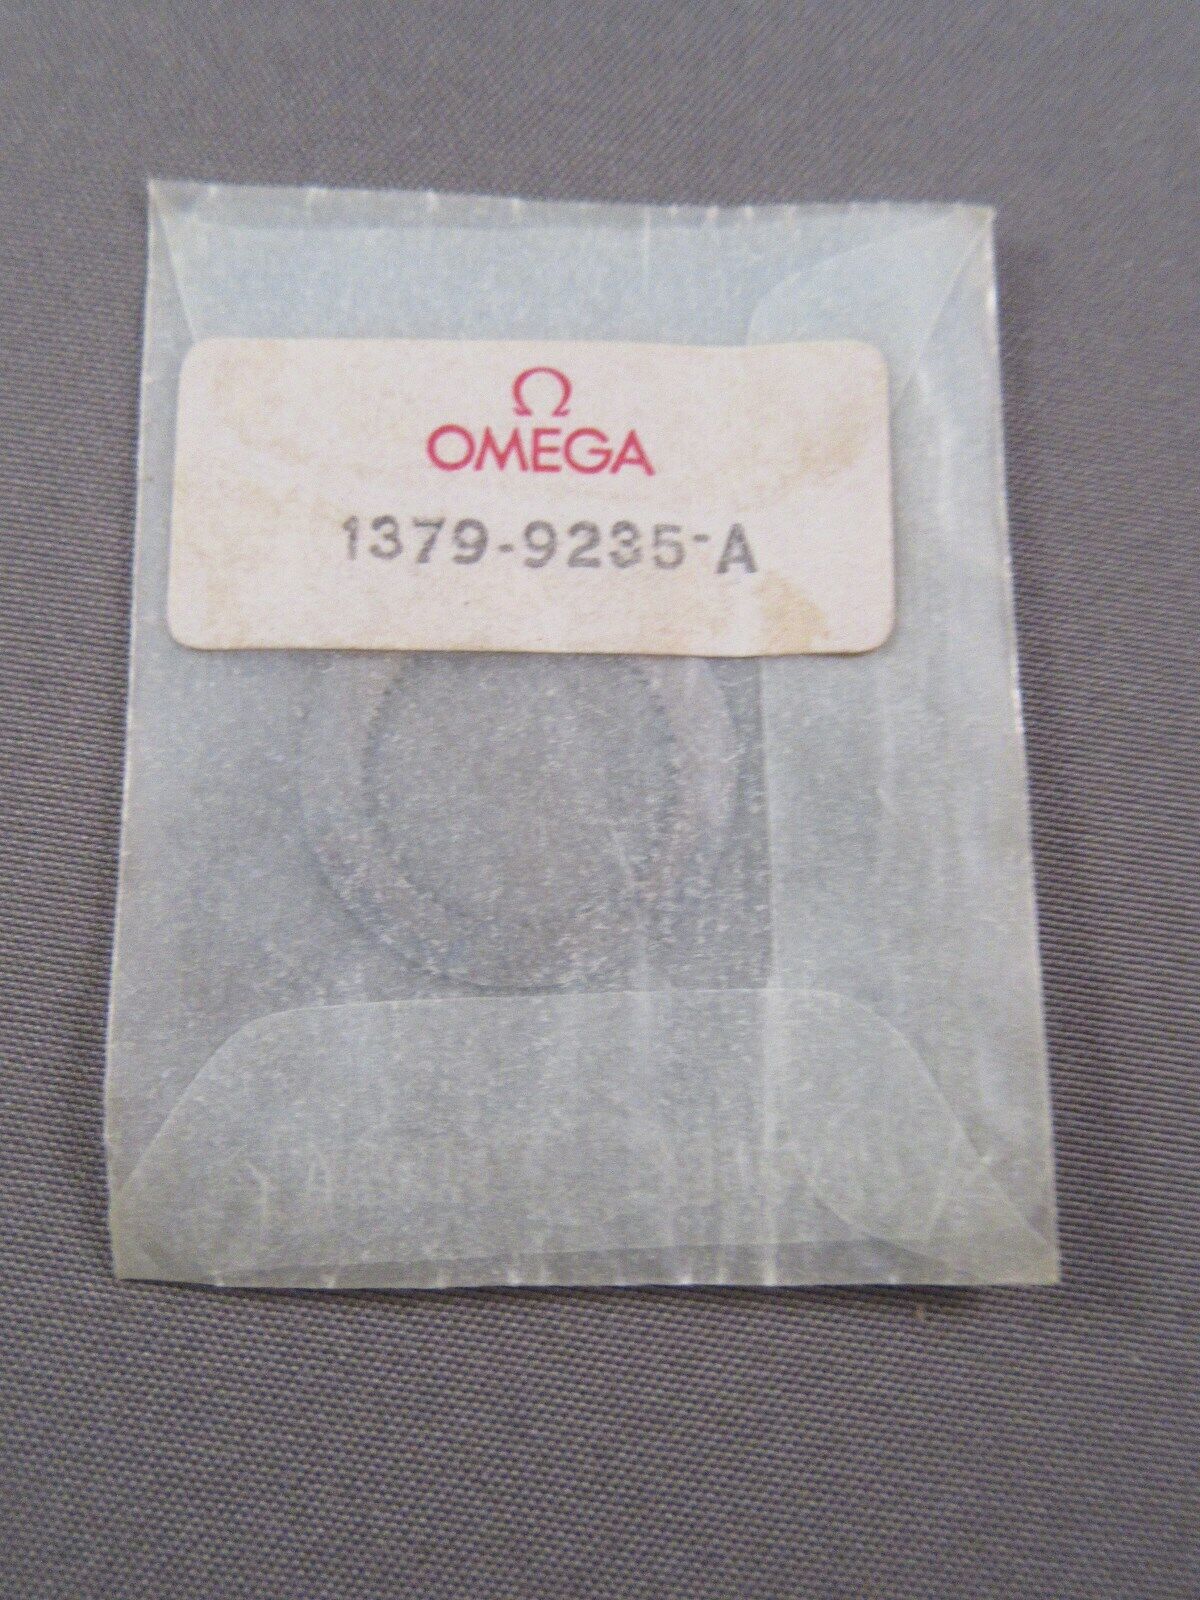 Omega 1379 part 9235A - white date ring with black figures - 3H - sealed Cena specjalna super cena specjalna